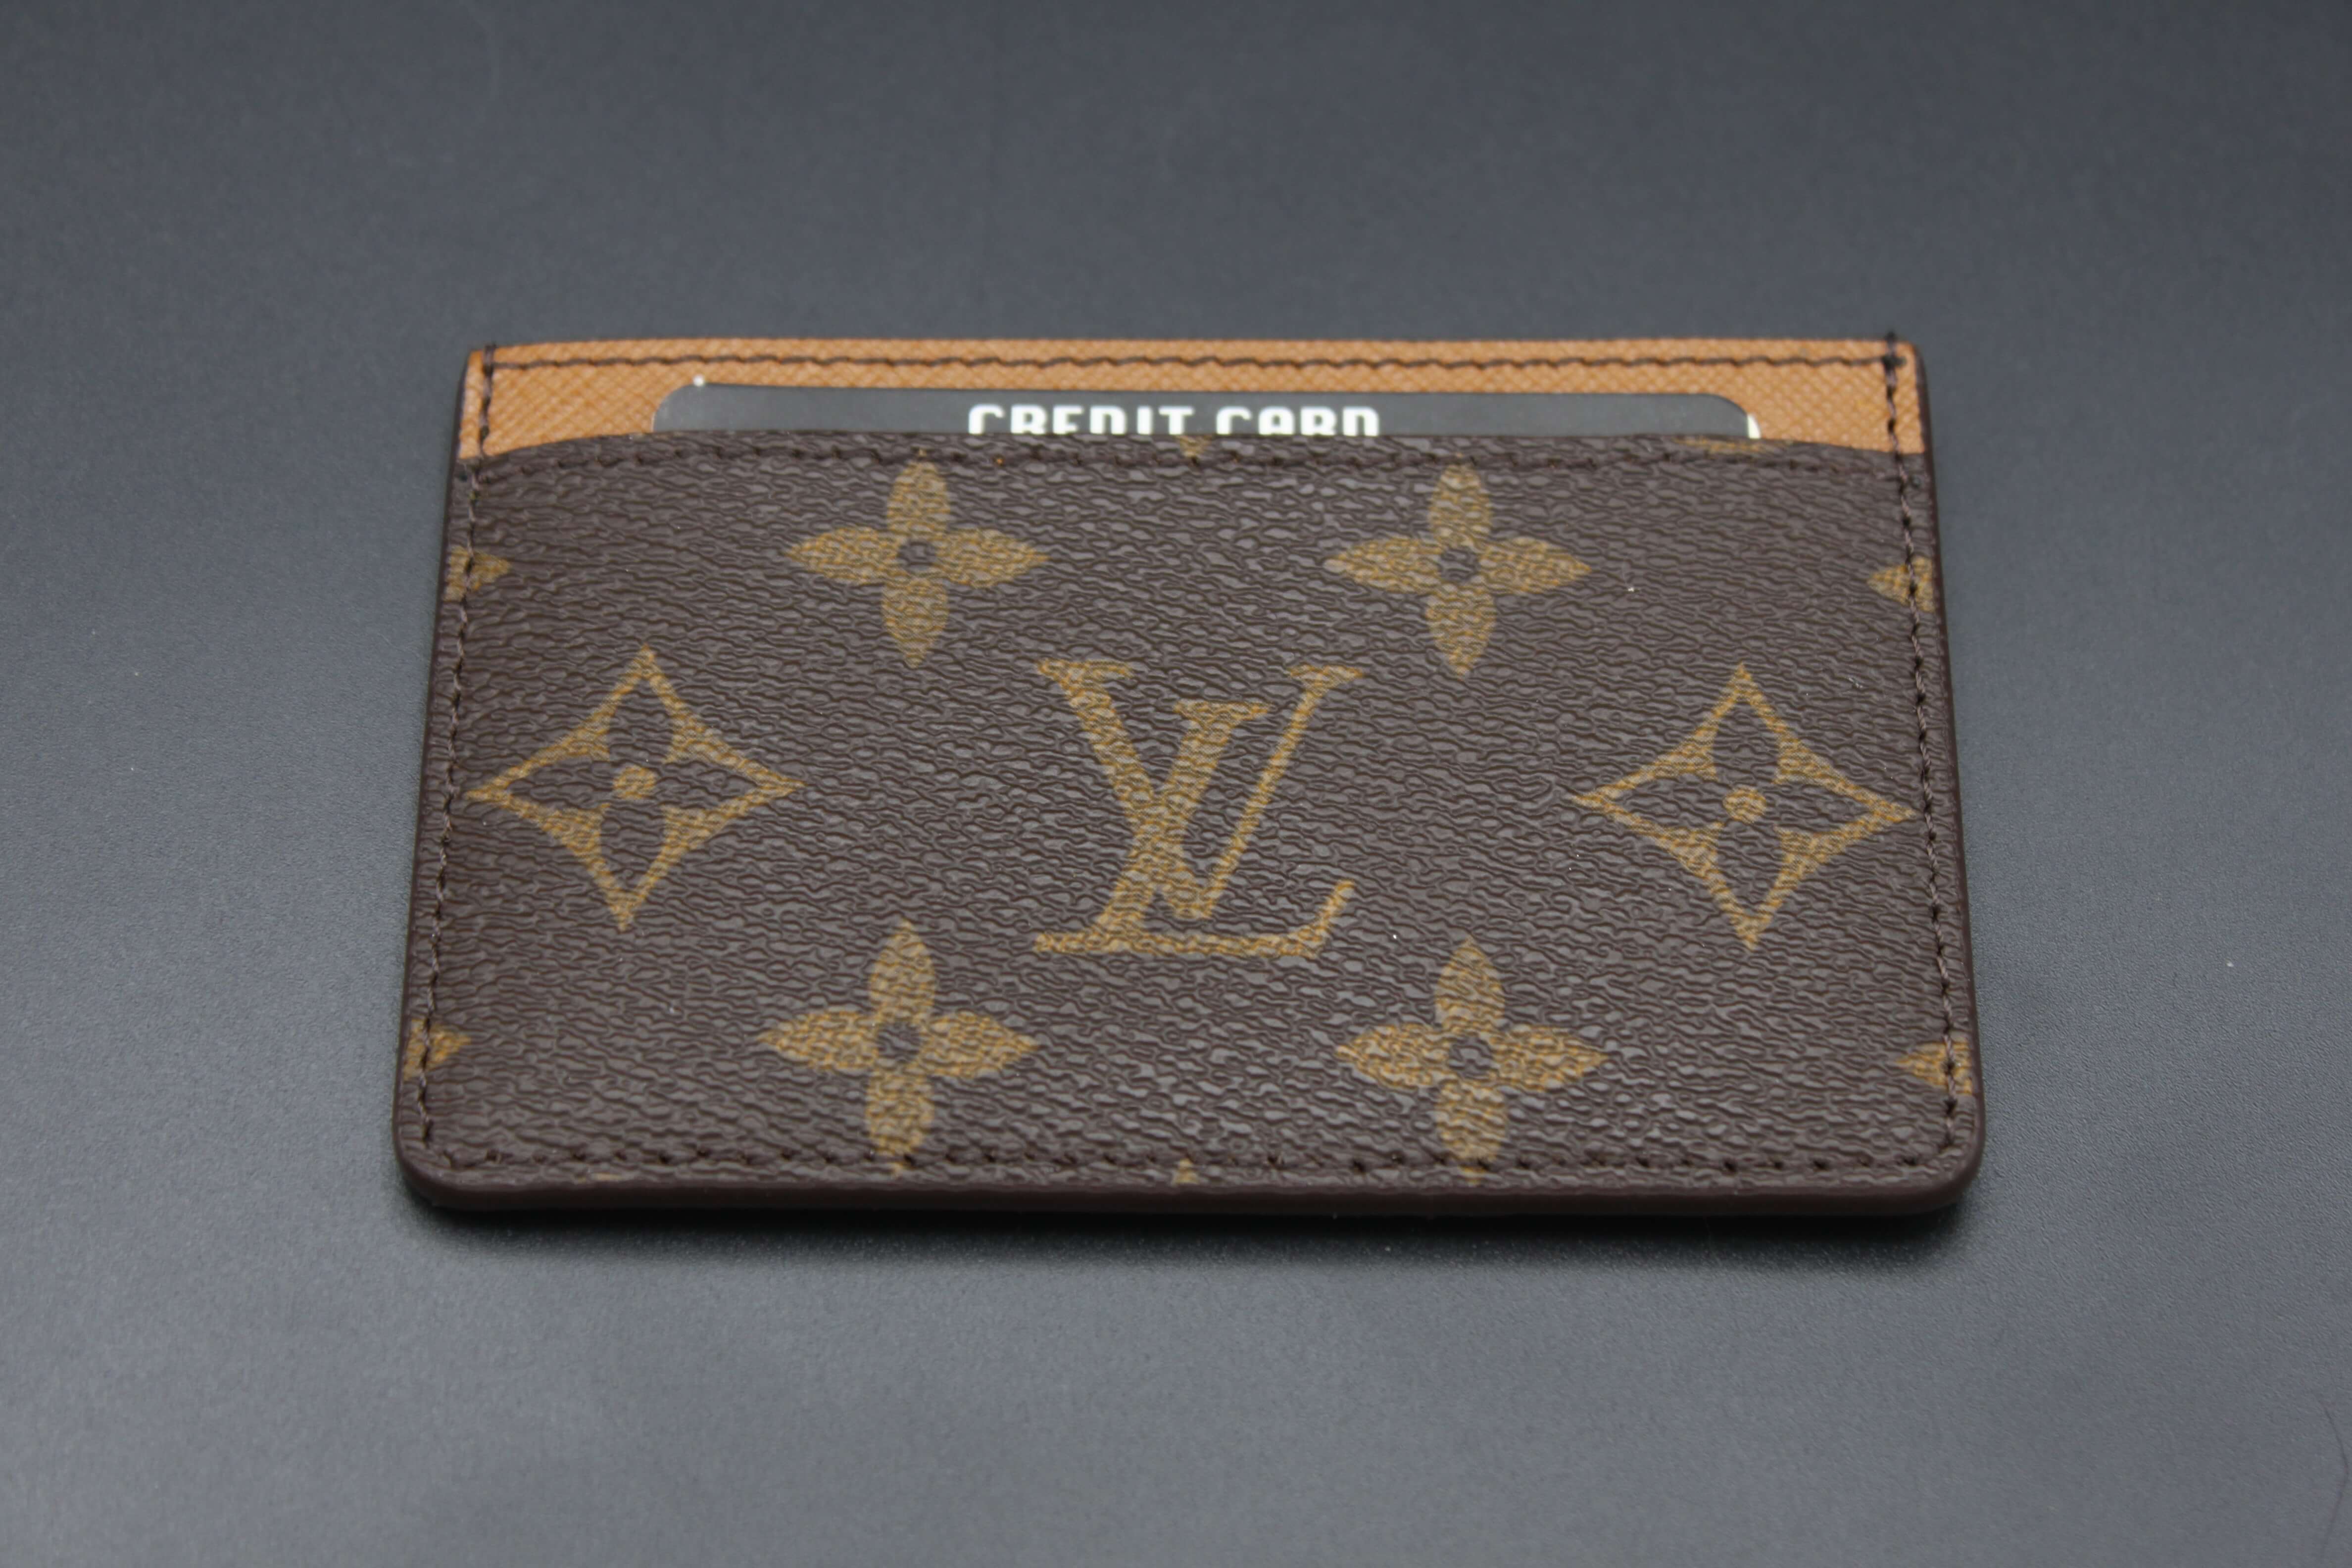 Louis Vuitton Monogram Mens Card Holders 2023 Ss, Brown